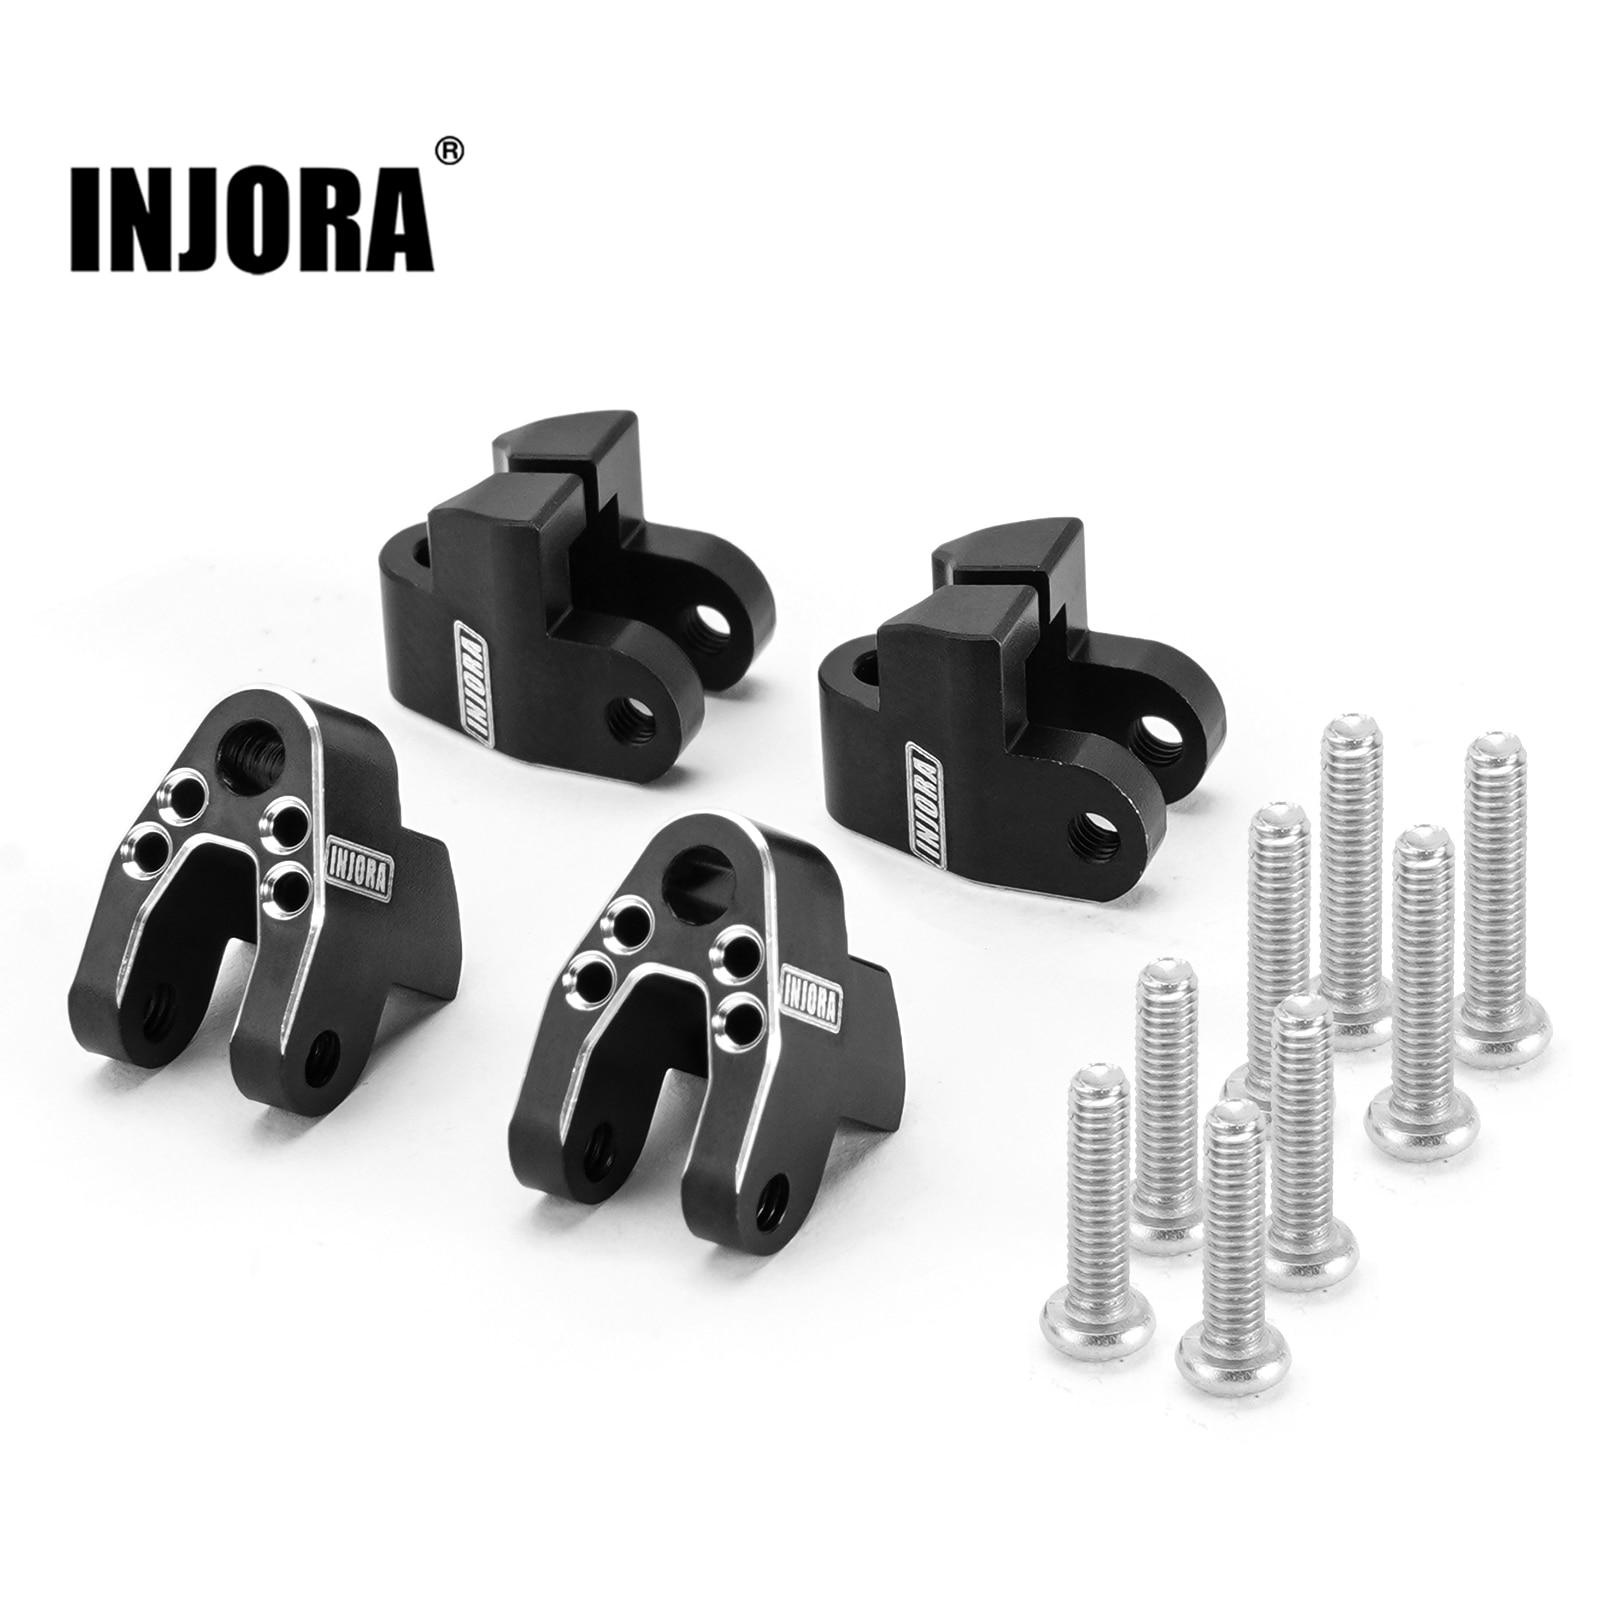 INJORA-CNC-Aluminum-Stock-Shock-Mount-Height-Lift-Kit-for-1-18-RC-Crawler-TRX4M-Upgrade.jpg